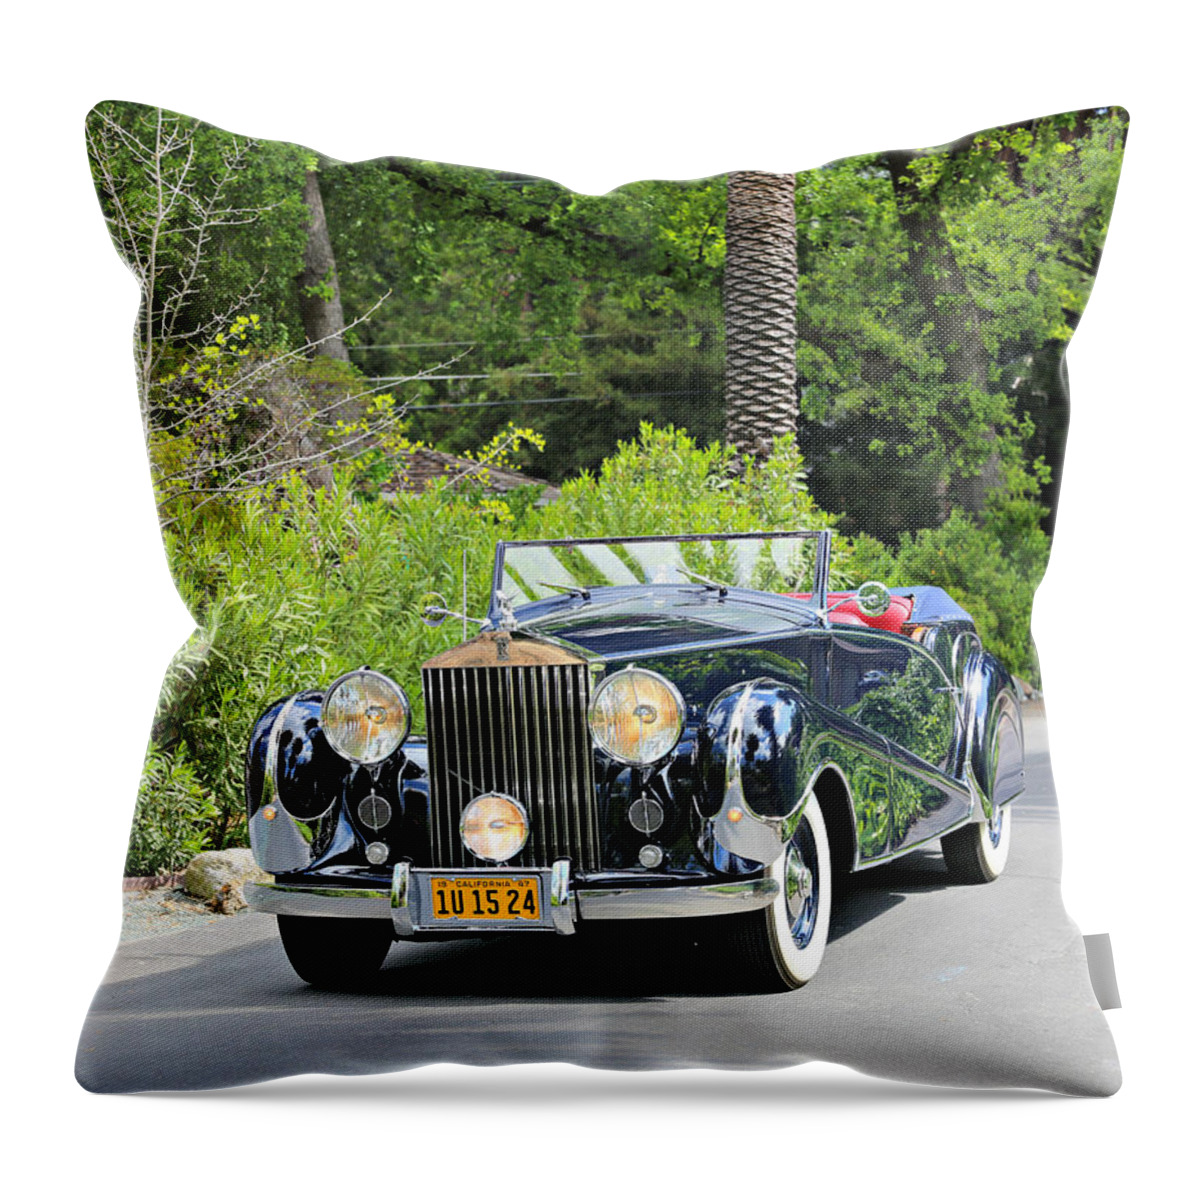 Inskip Throw Pillow featuring the photograph 1947 Inskip Rolls Royce by Steve Natale